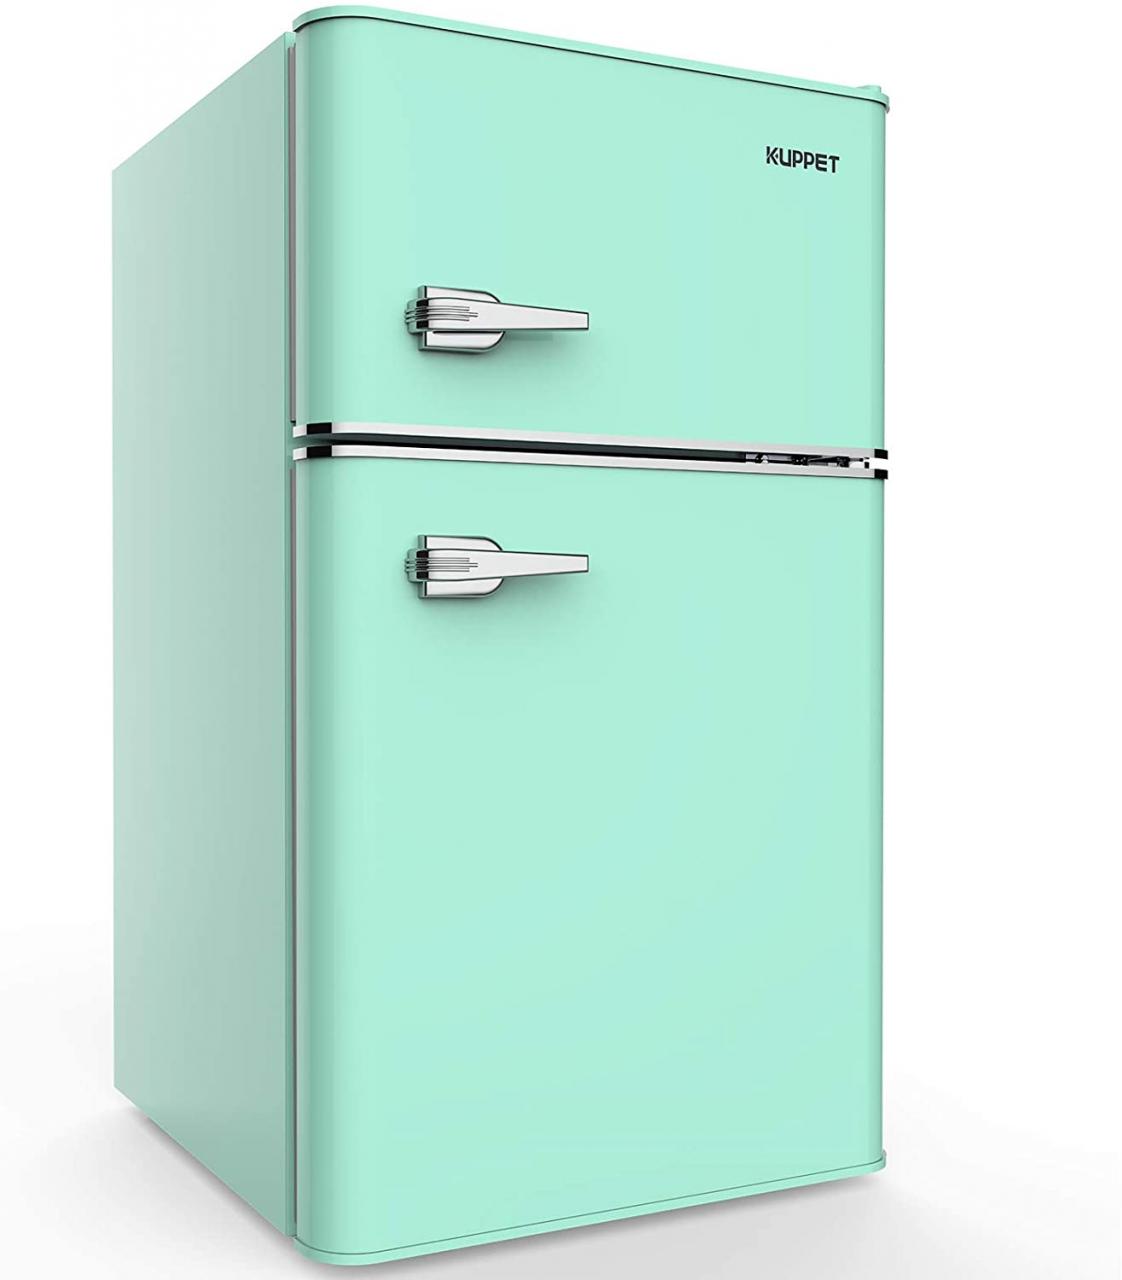 Buy KUPPET Compact Refrigerator Mini Refrigerator for Dorm,Garage, Camper,  Basement or Office, Double Door Refrigerator and Freezer, 3.2 Cu.Ft, Black  Online in Hong Kong. B07S9XCDC7